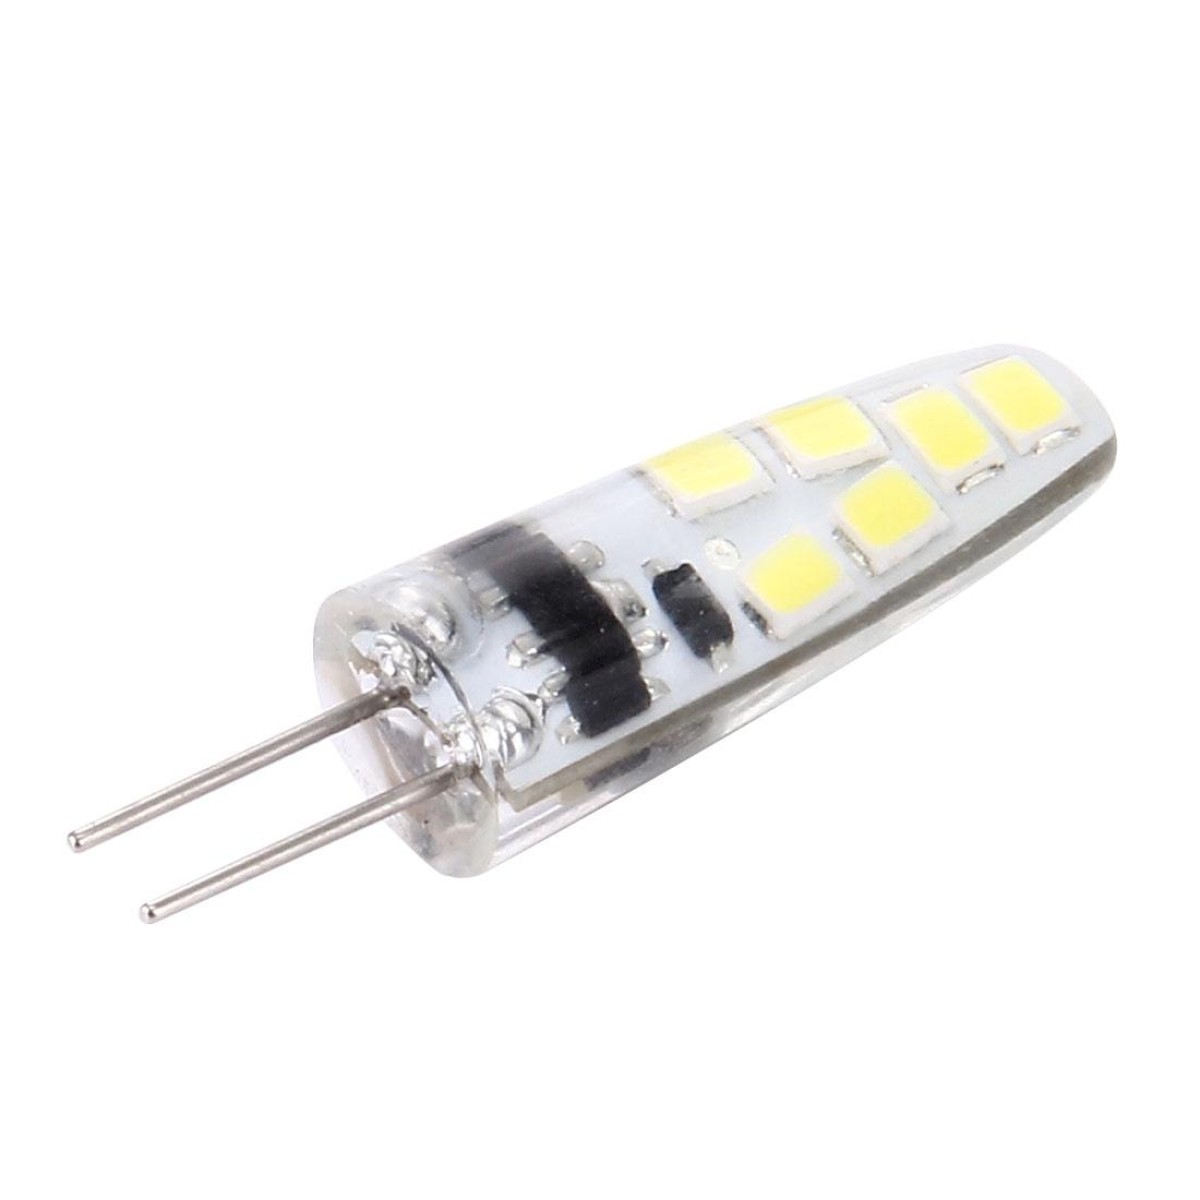 G4 2W 180LM Corn Light Bulb, 12 LED SMD 2835 Silicone, DC 12V, Small Size: 4.1x1x1cm(White Light)